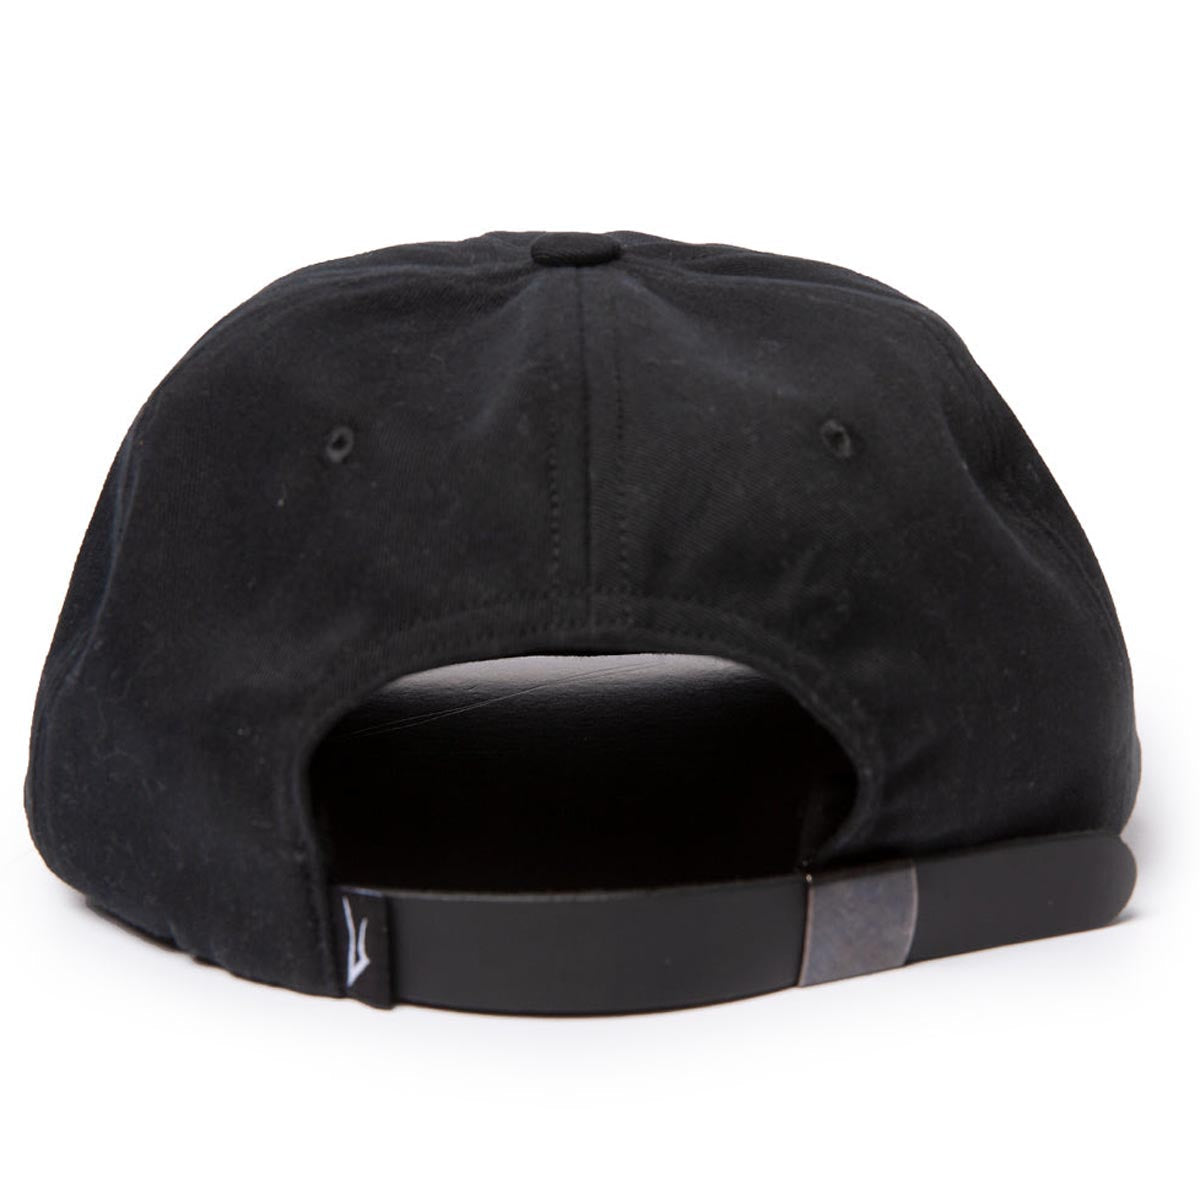 Lakai Arch Polo Hat - Black image 2